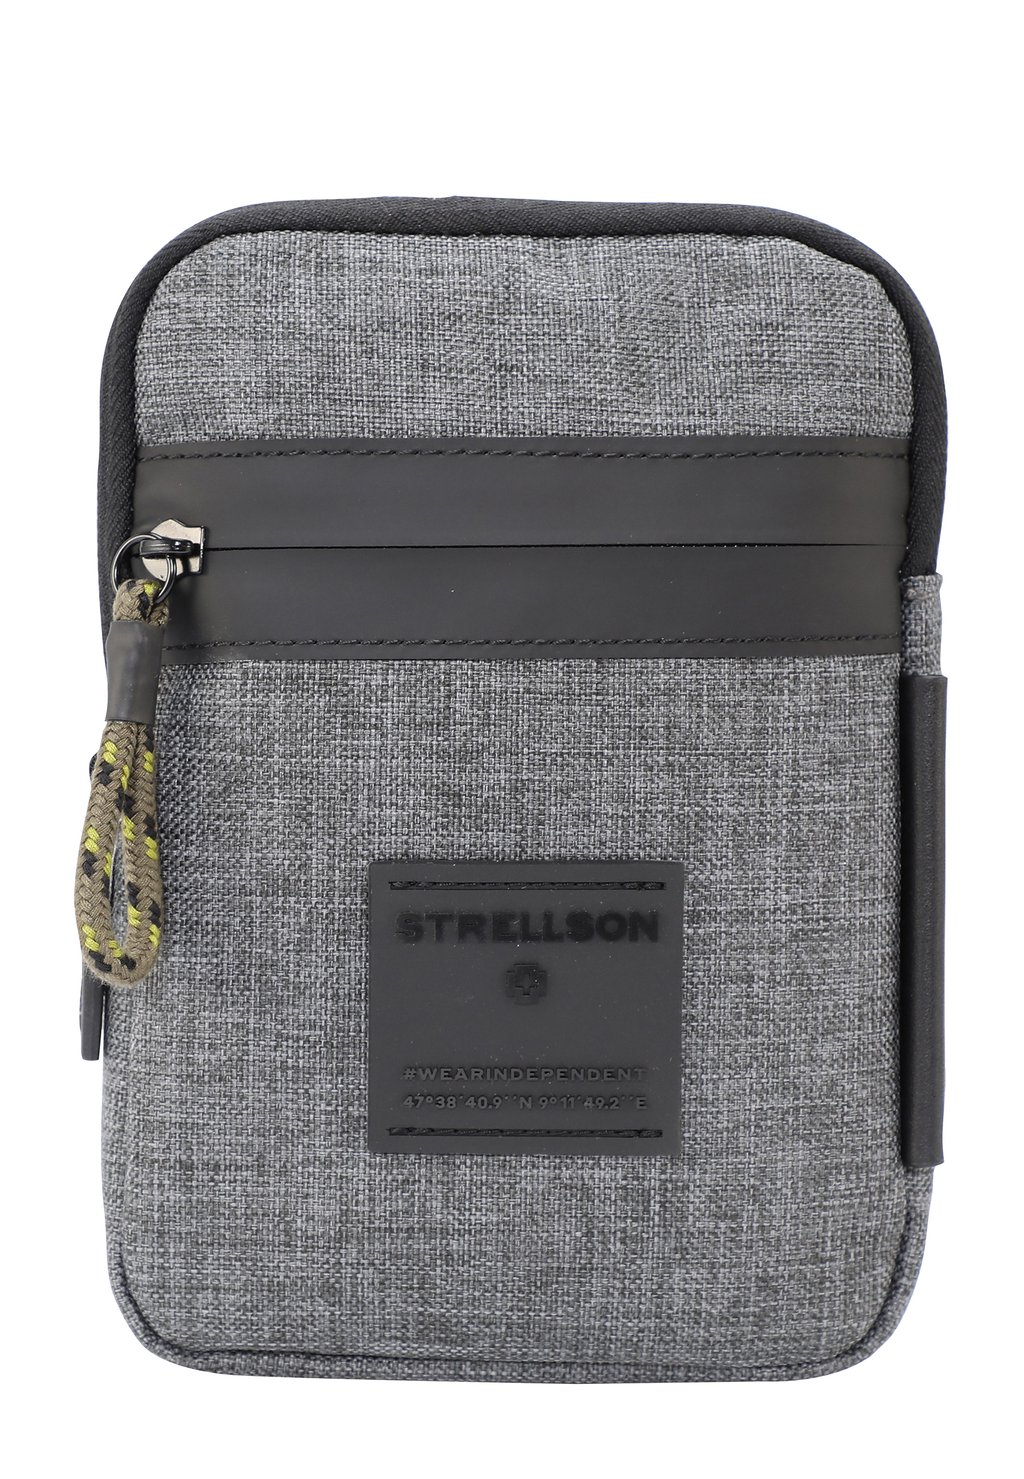 Сумка через плечо NORTHWOOD 2.0 BRIAN Strellson Premium, цвет darkgrey сумка через плечо strellson premium цвет darkgrey